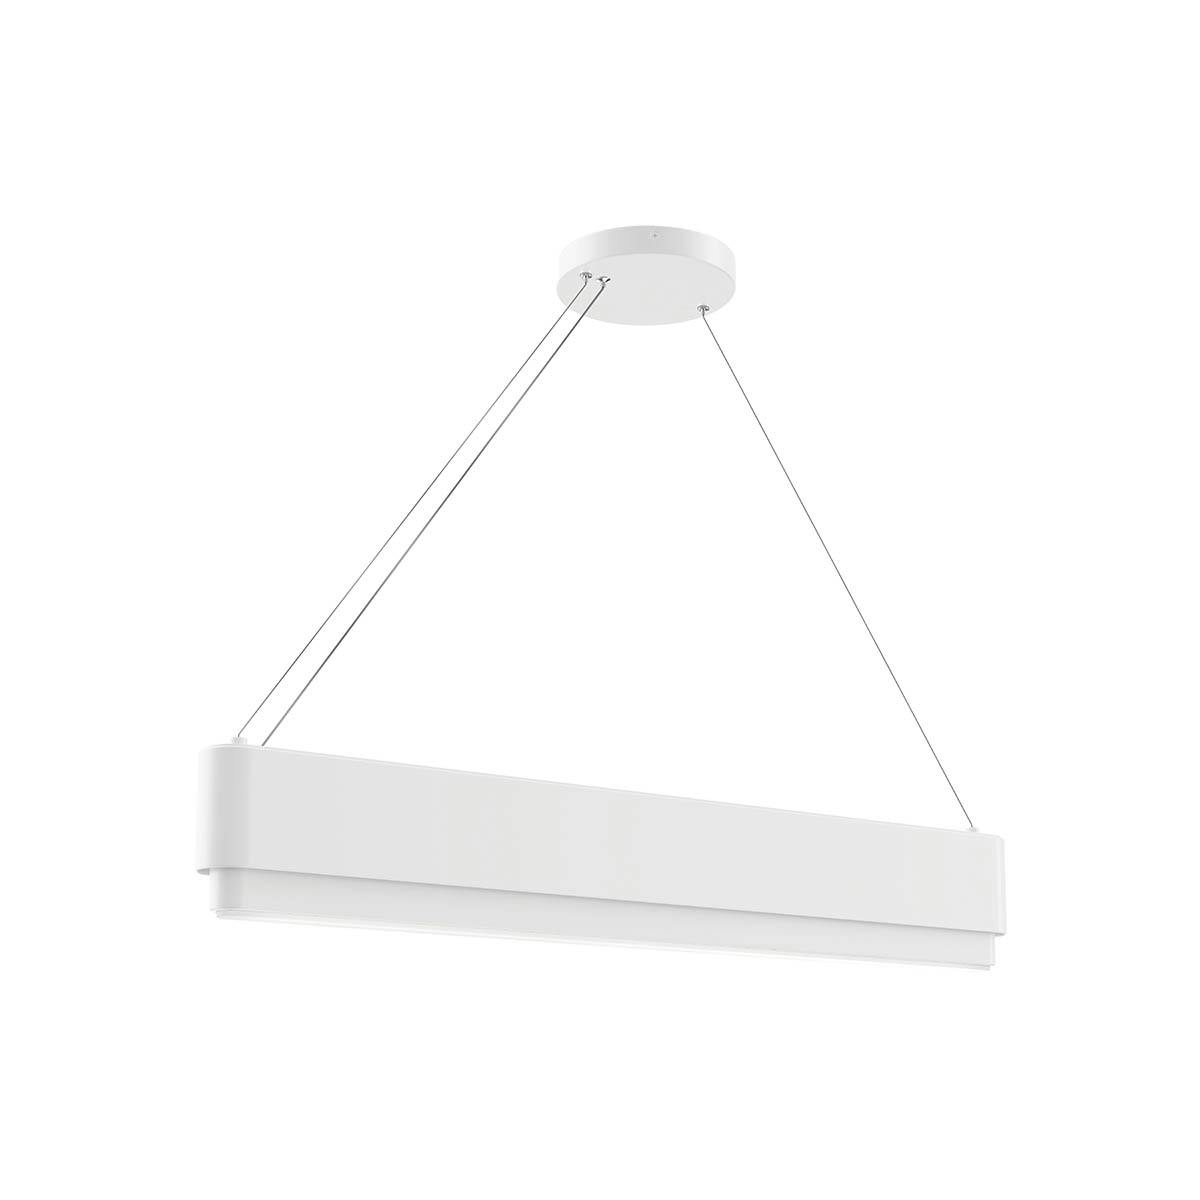 Walman 35.5" LED Linear Pendant White on a white background